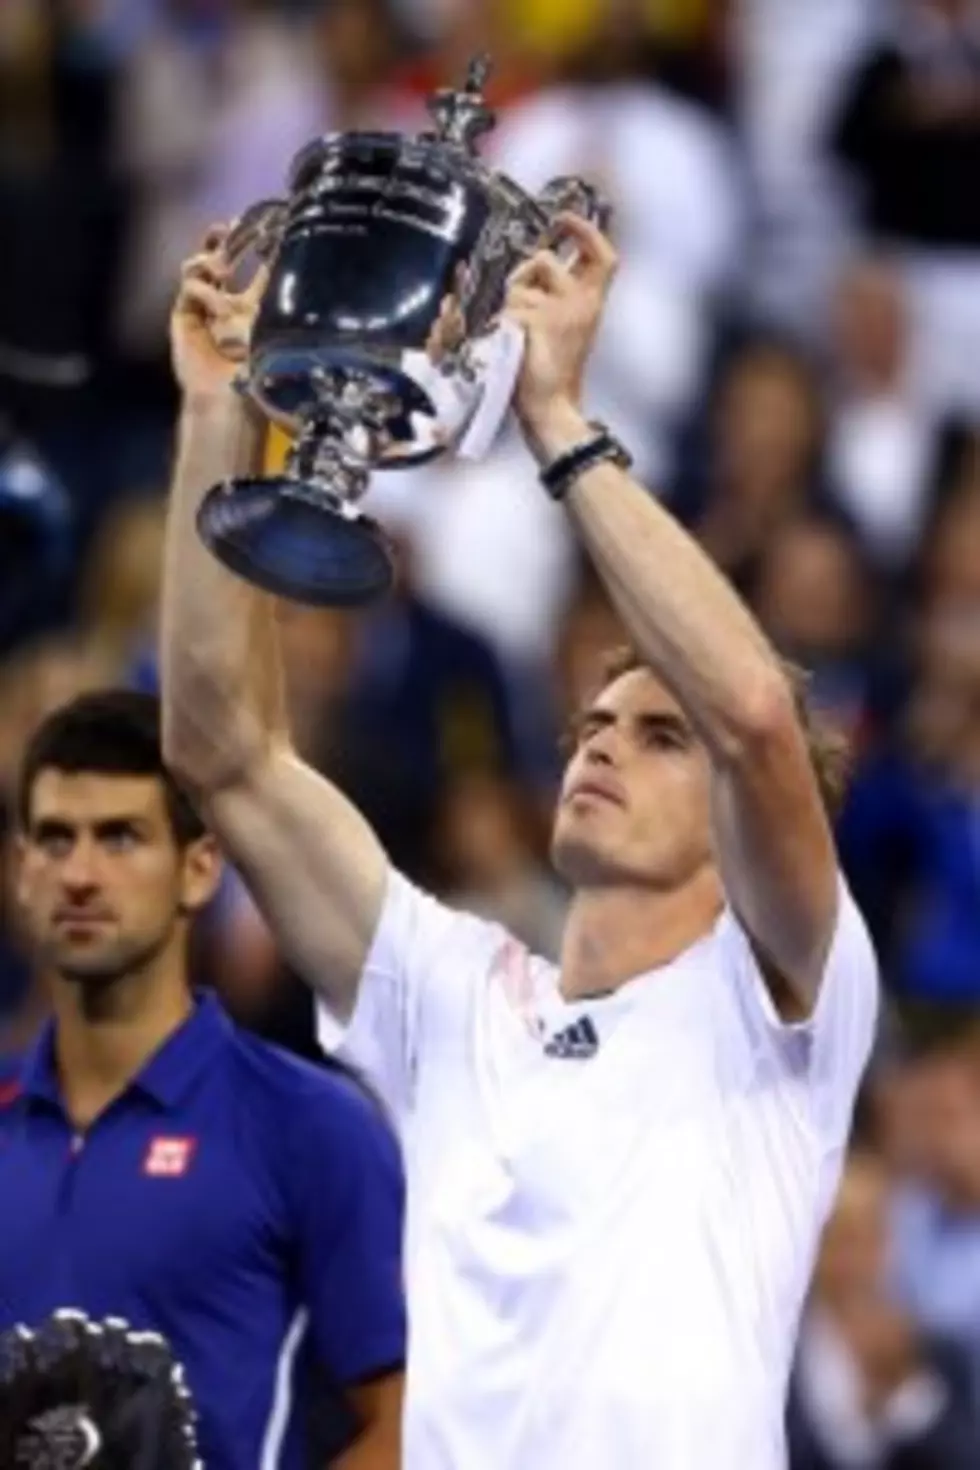 Andy Murray Defeats Novak Djokovic To Claim First Slam